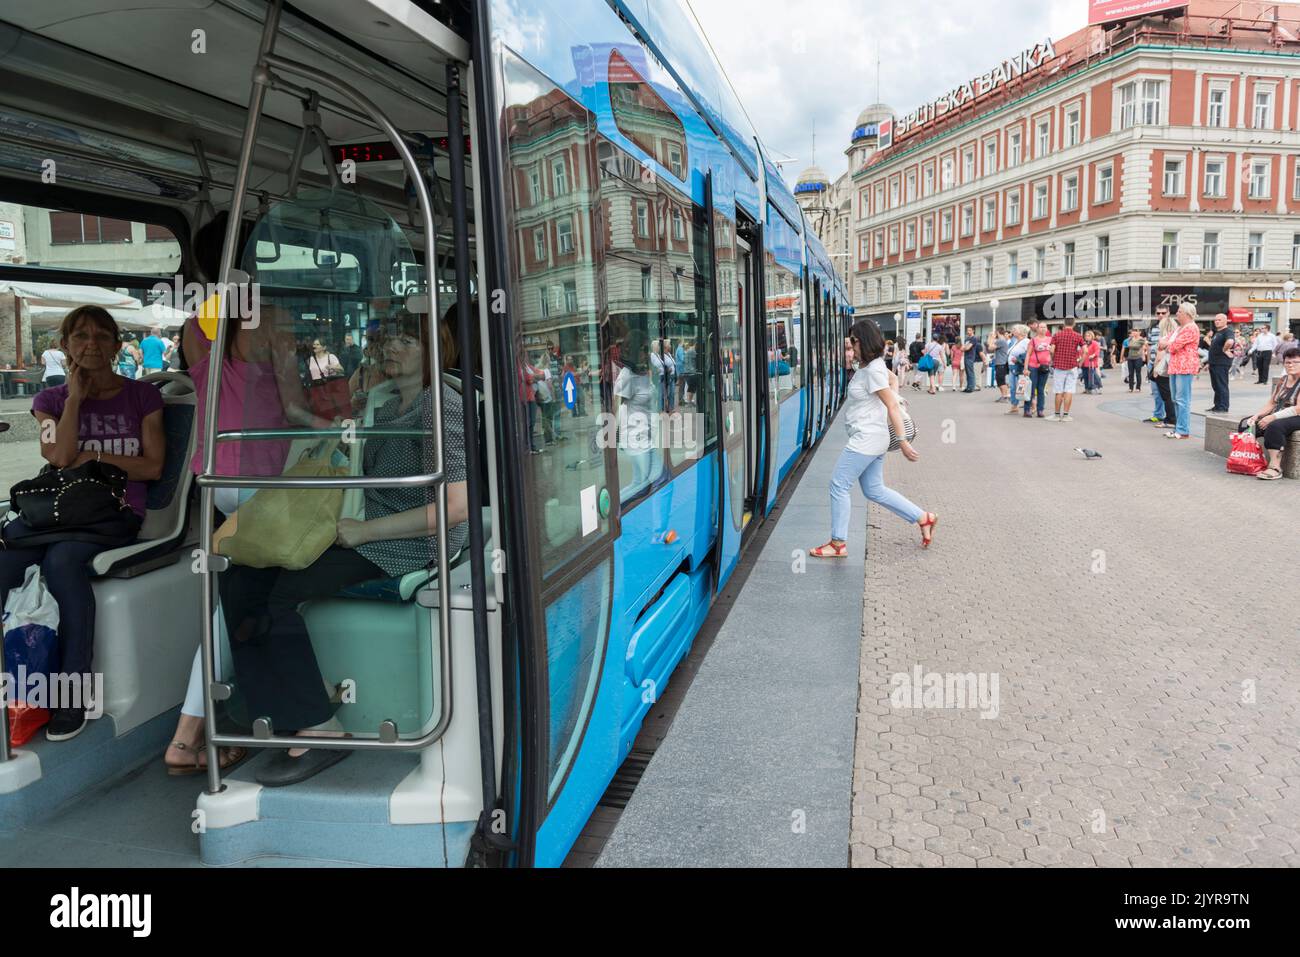 Modern blue tram and boarding /disembarking passengers at Ban Jelacic Square in Zagreb, Croatia, Europe Stock Photo